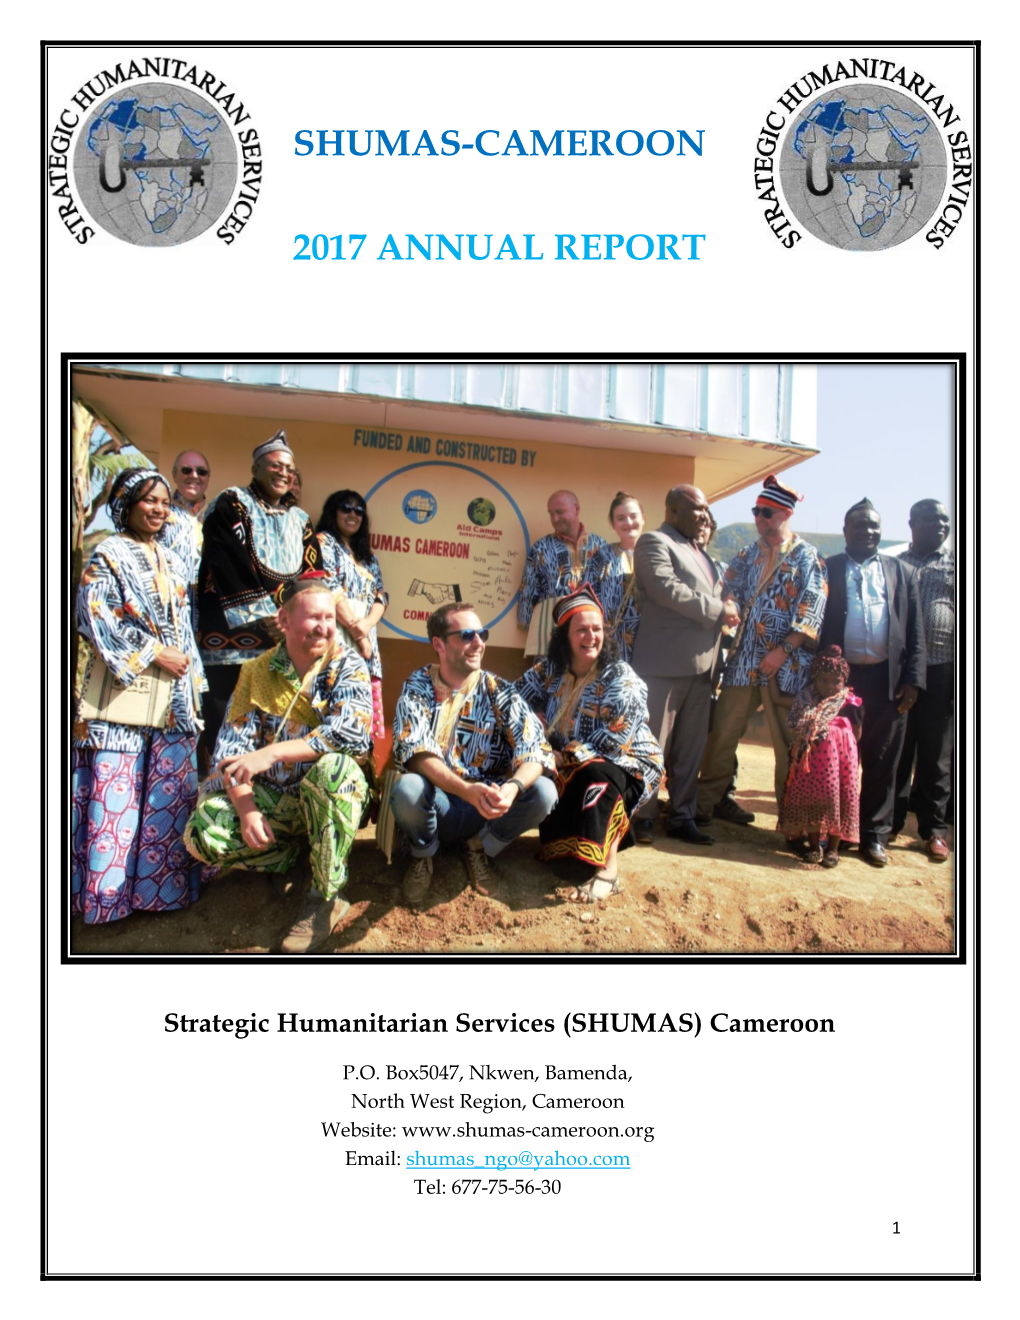 Shumas-Cameroon 2017 Annual Report